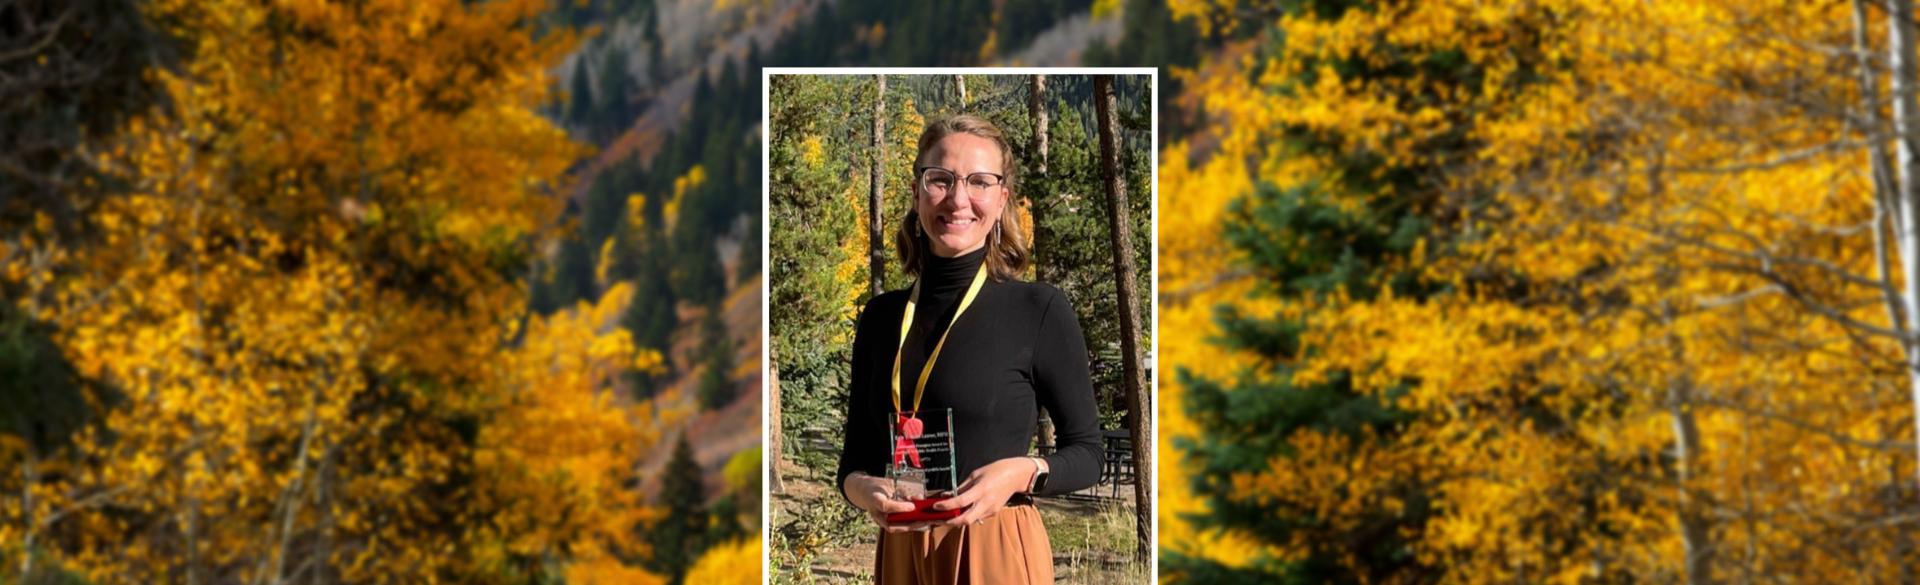 Erin Burke-Leaver holding award, fall foliage in background